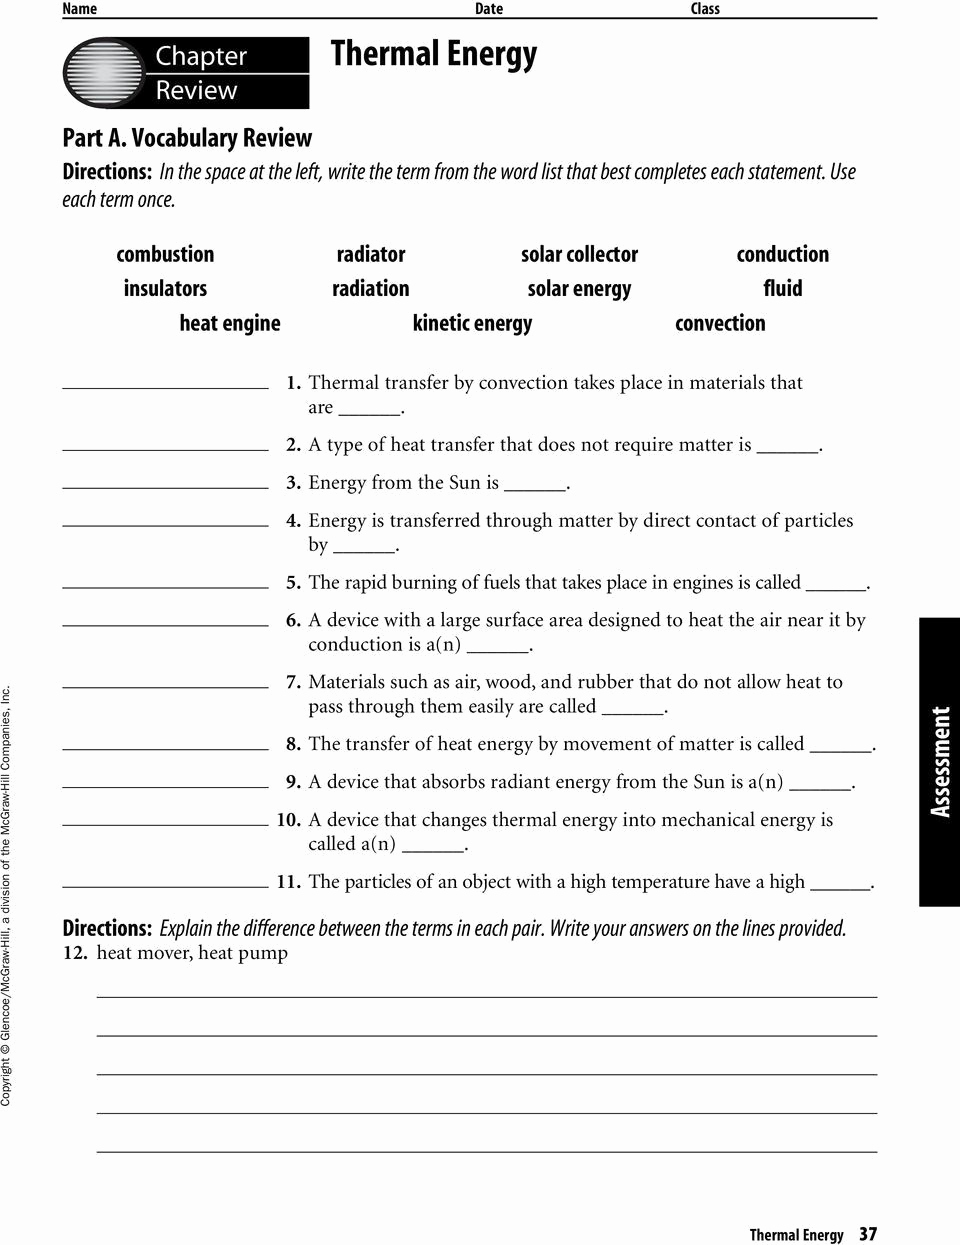 Energy 4th Grade Worksheets Inspirational Heat Transfer Worksheet Middle School thermal Energy